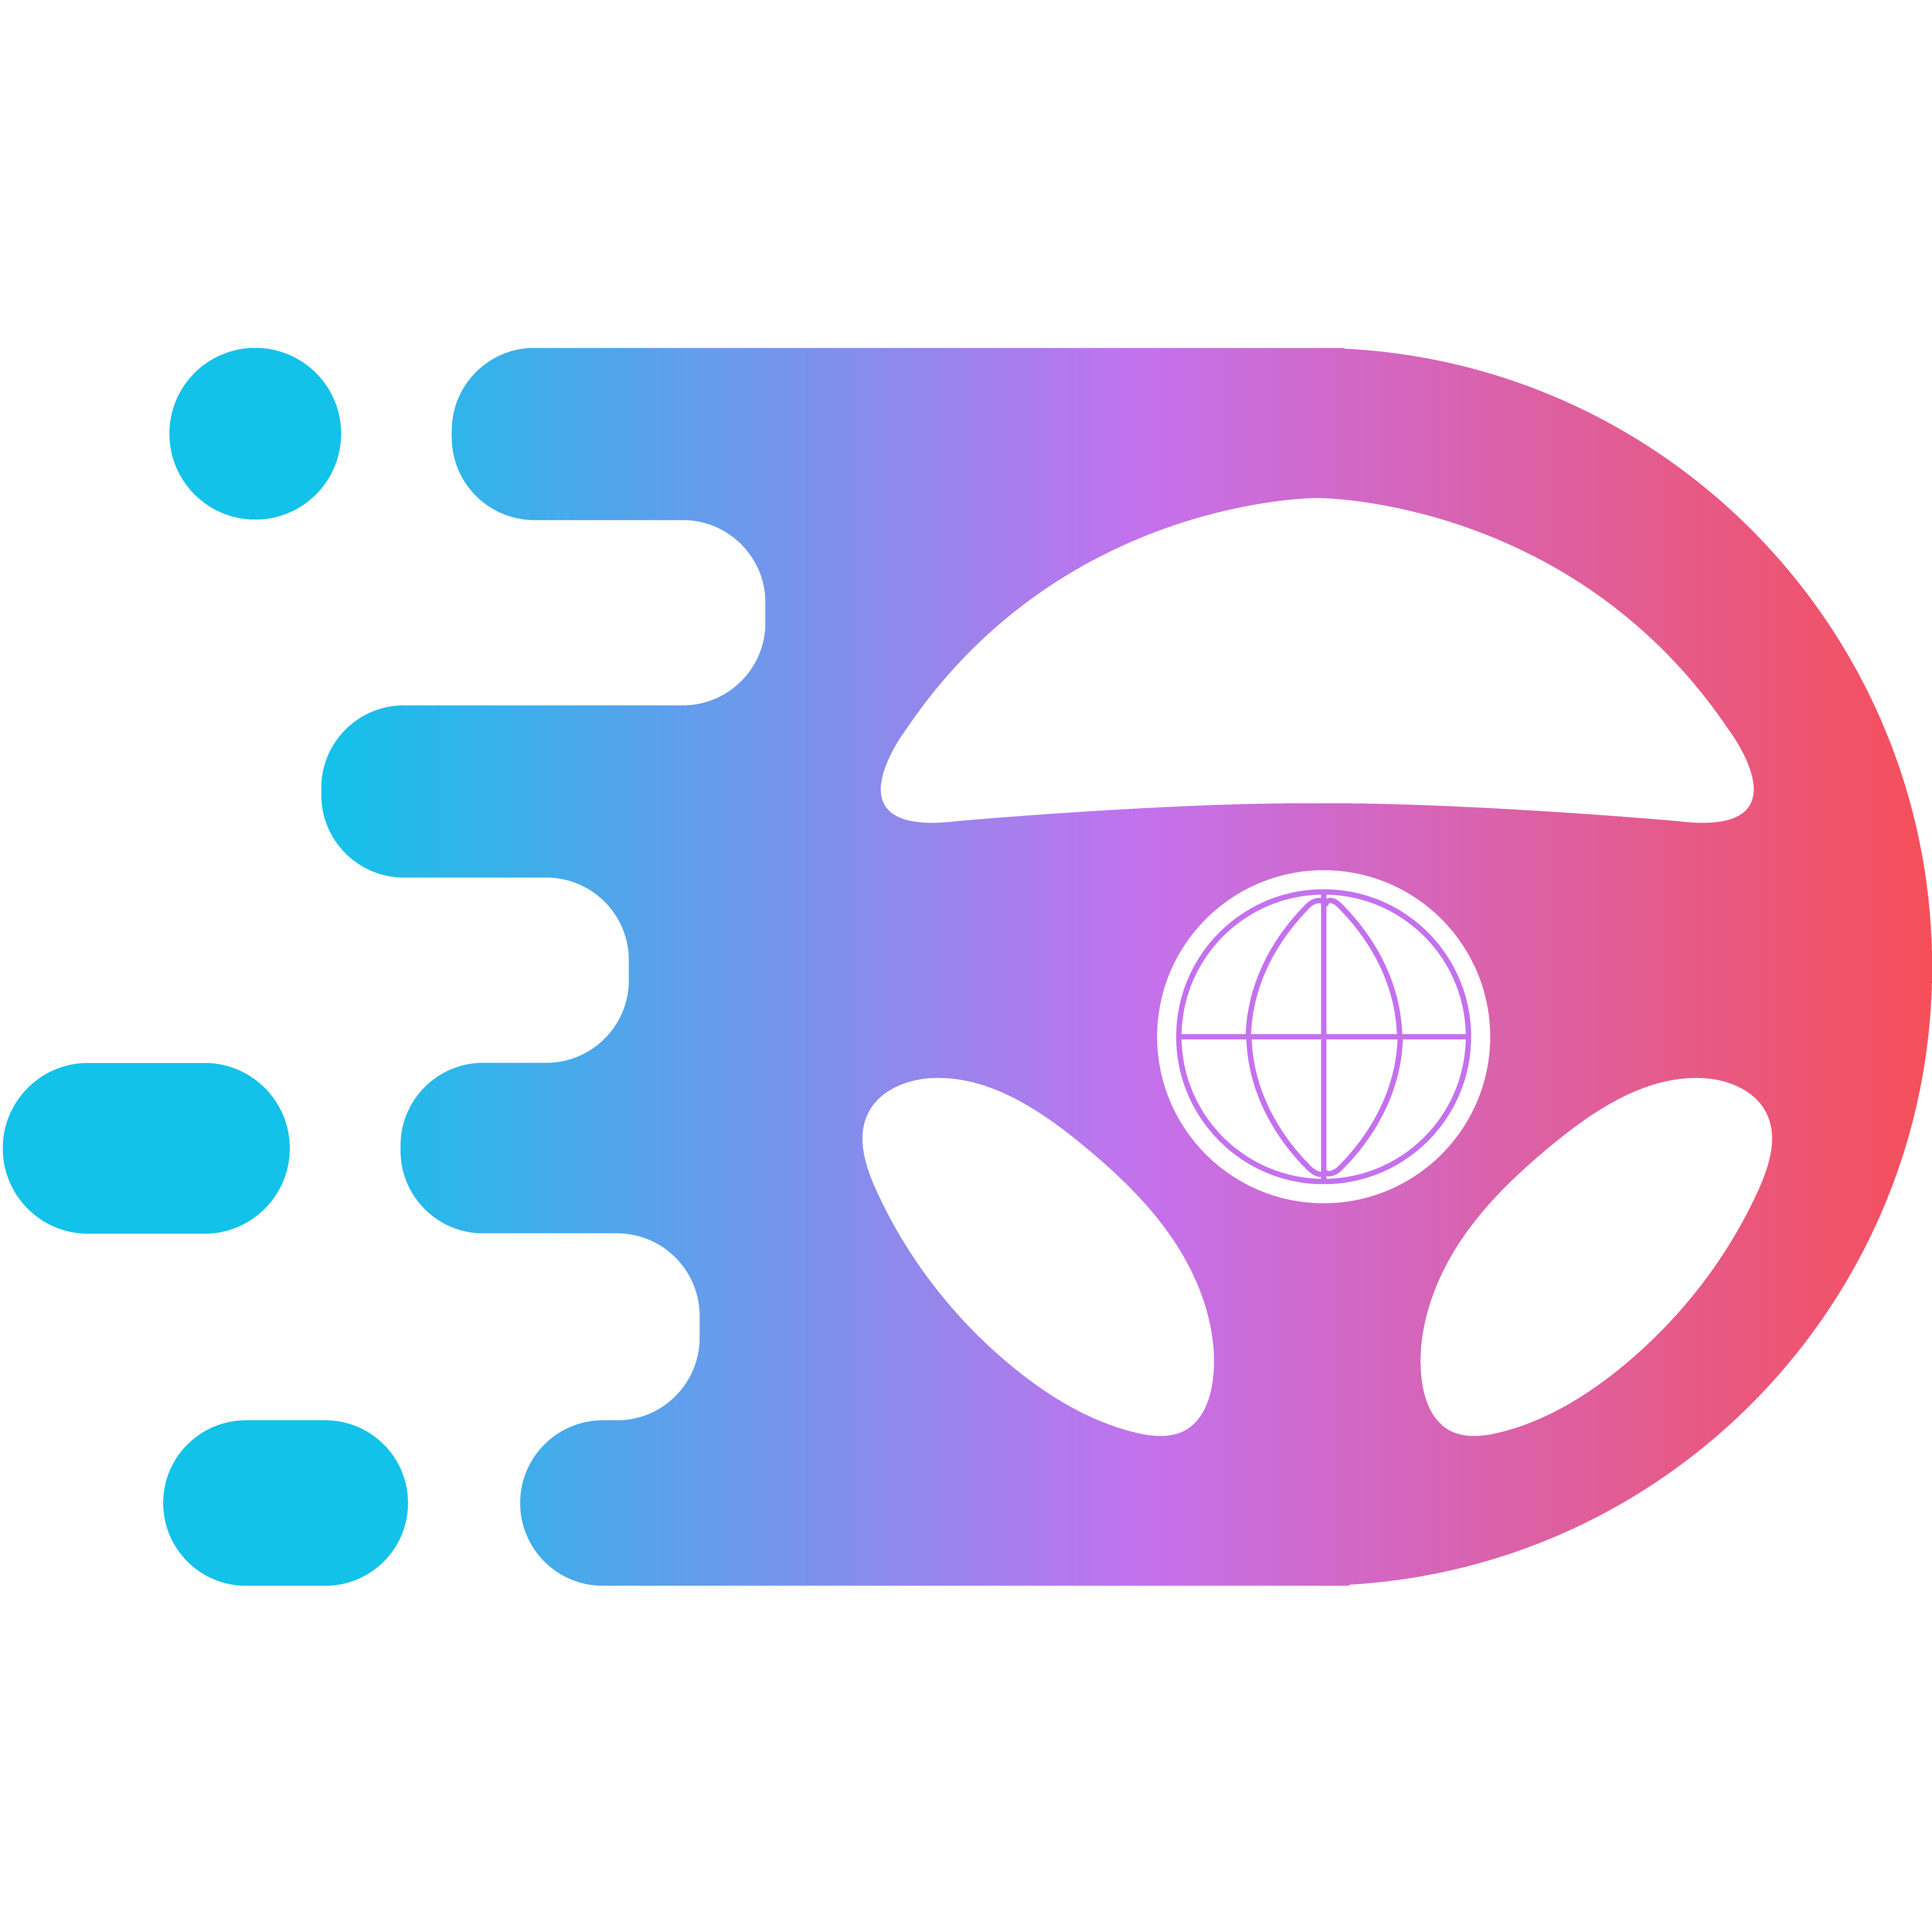 proxie logo ideas